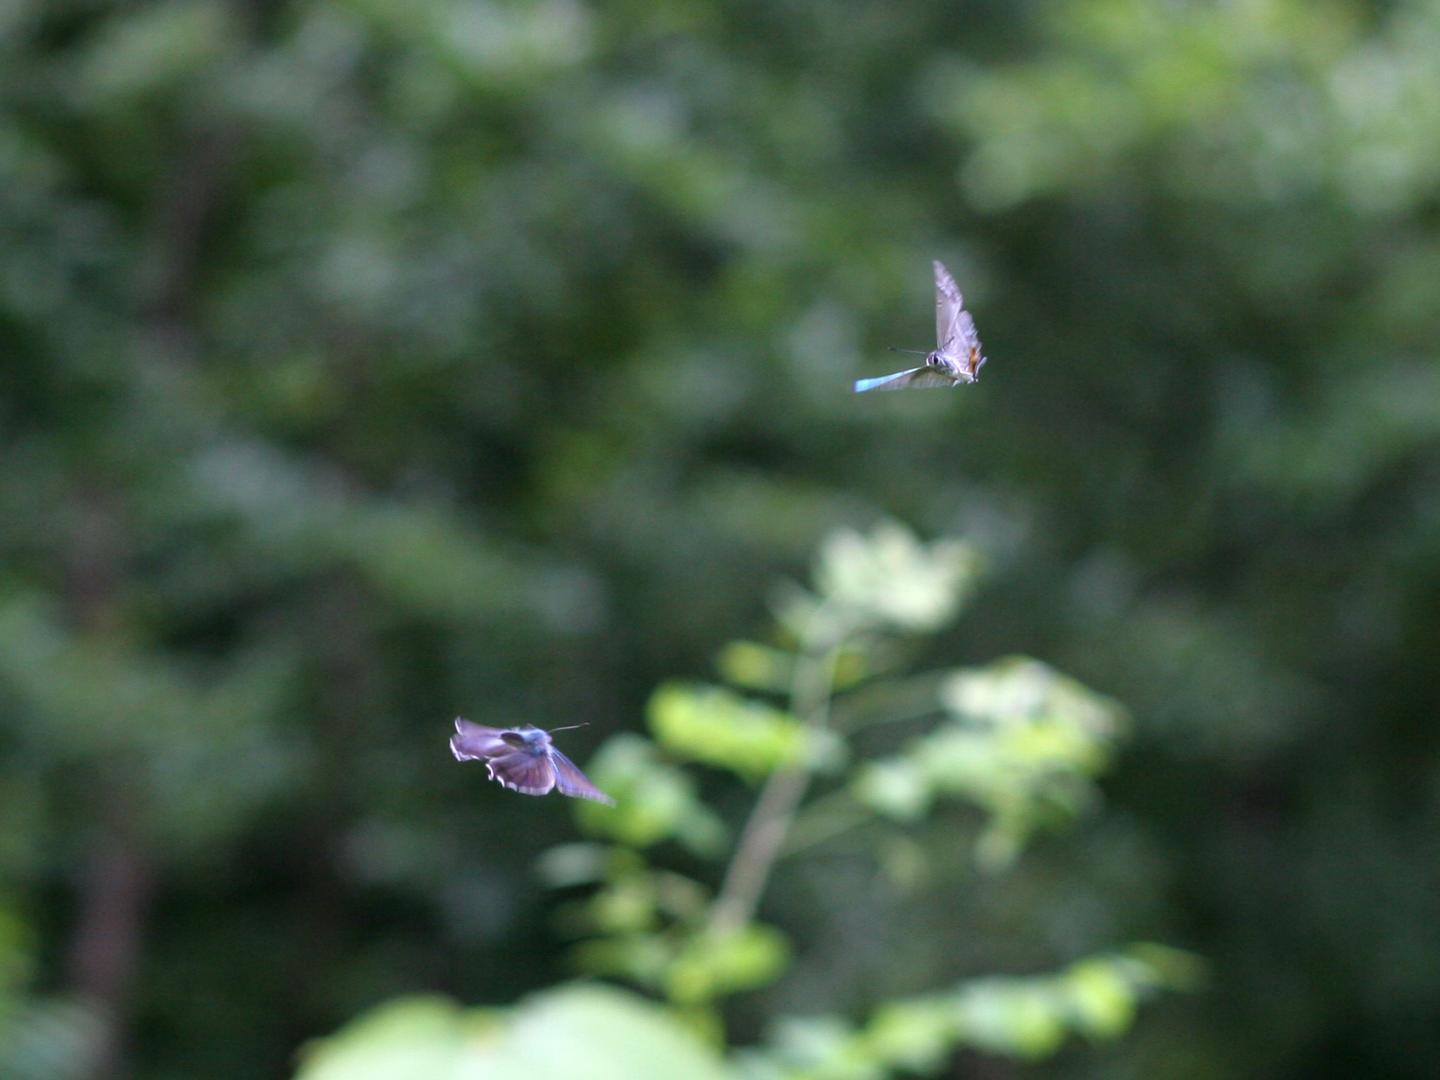 Butterflies: Agonistic Display or Courtship Behavior?